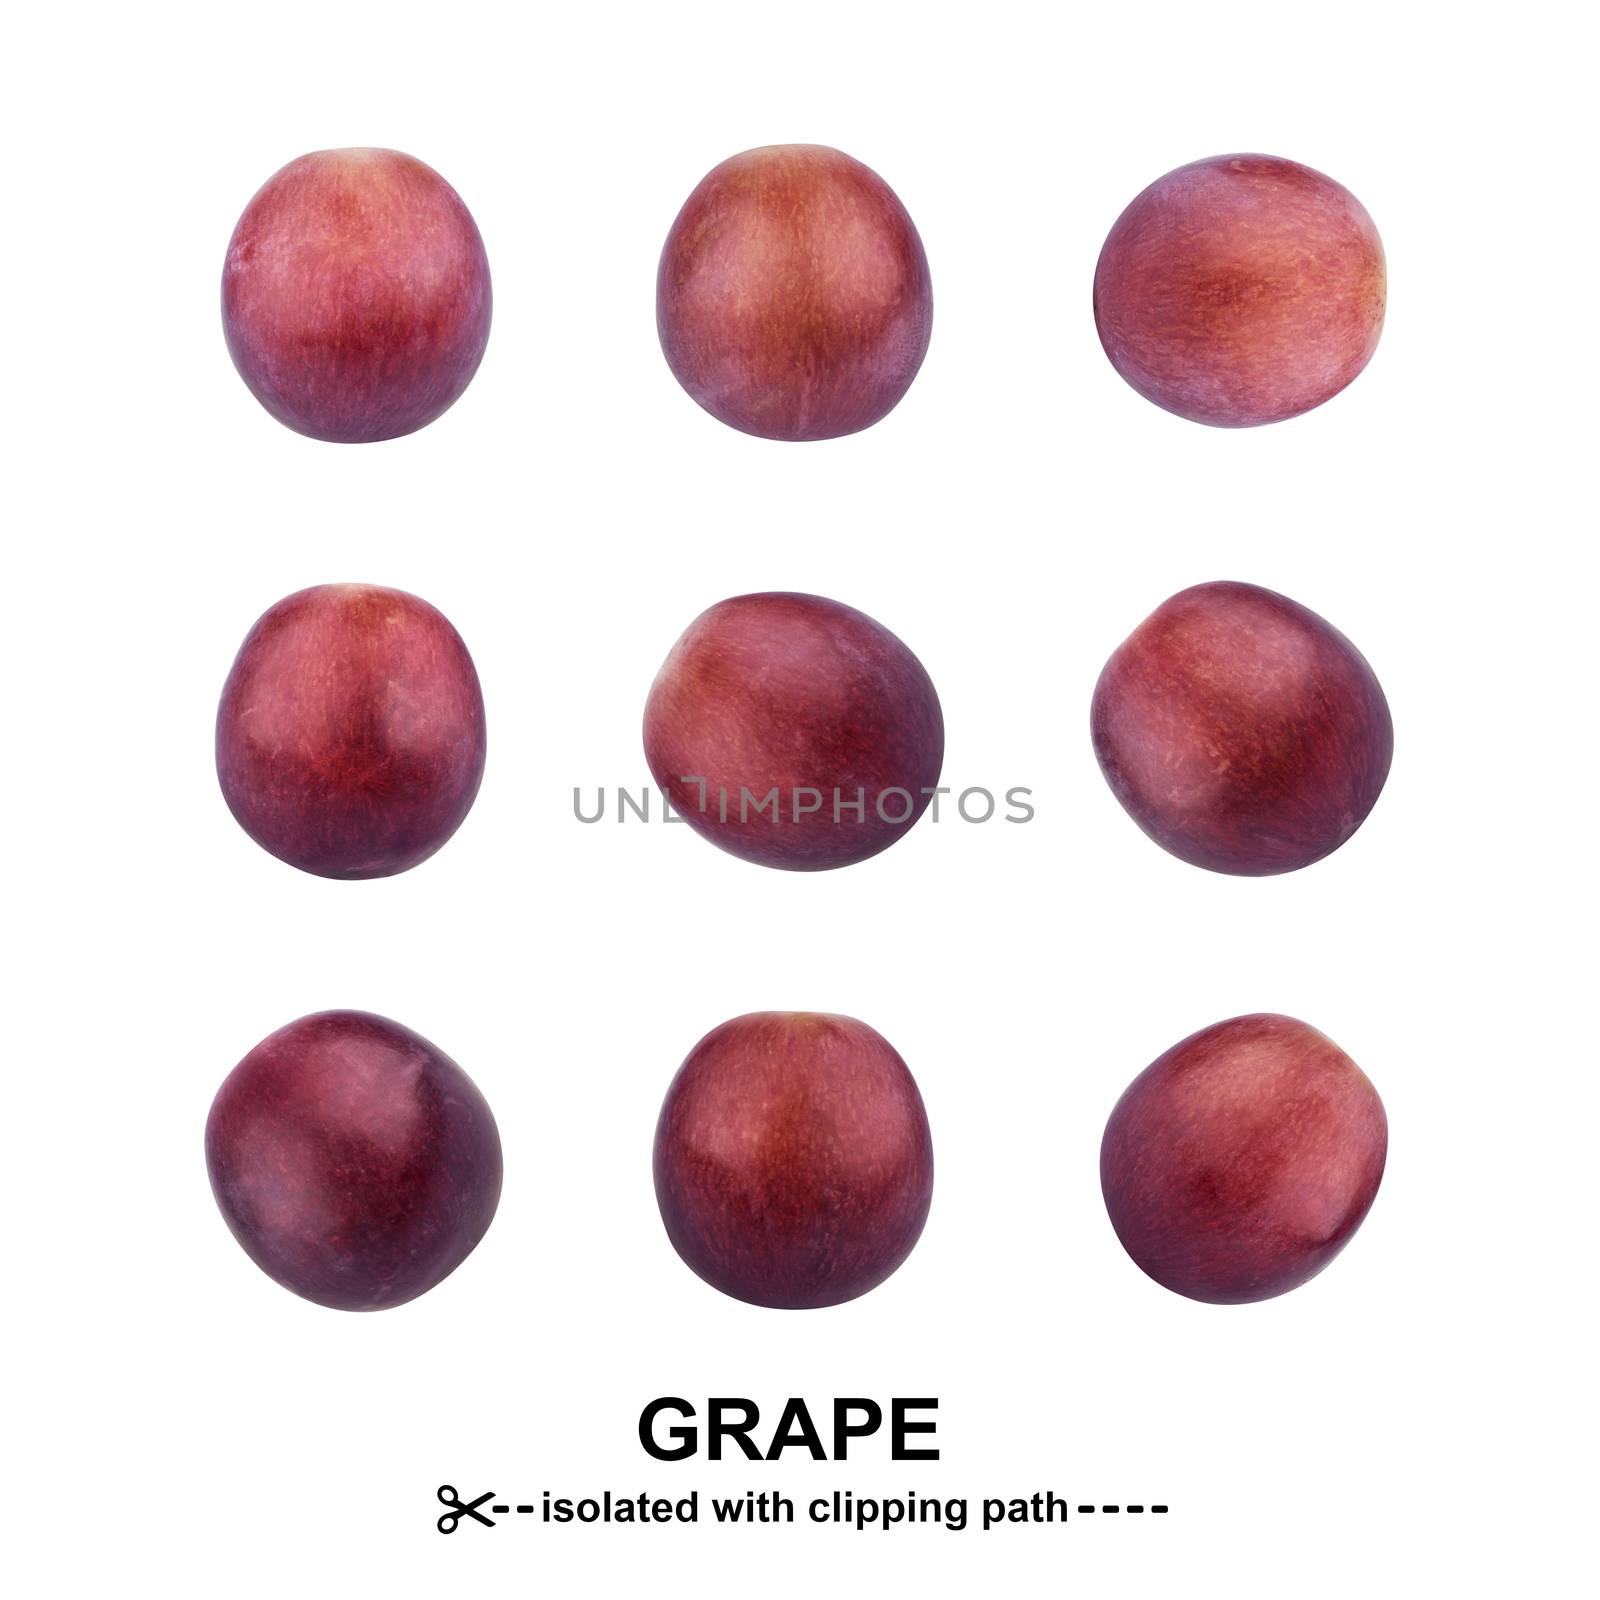 Grape isolated on white background. Studio shot